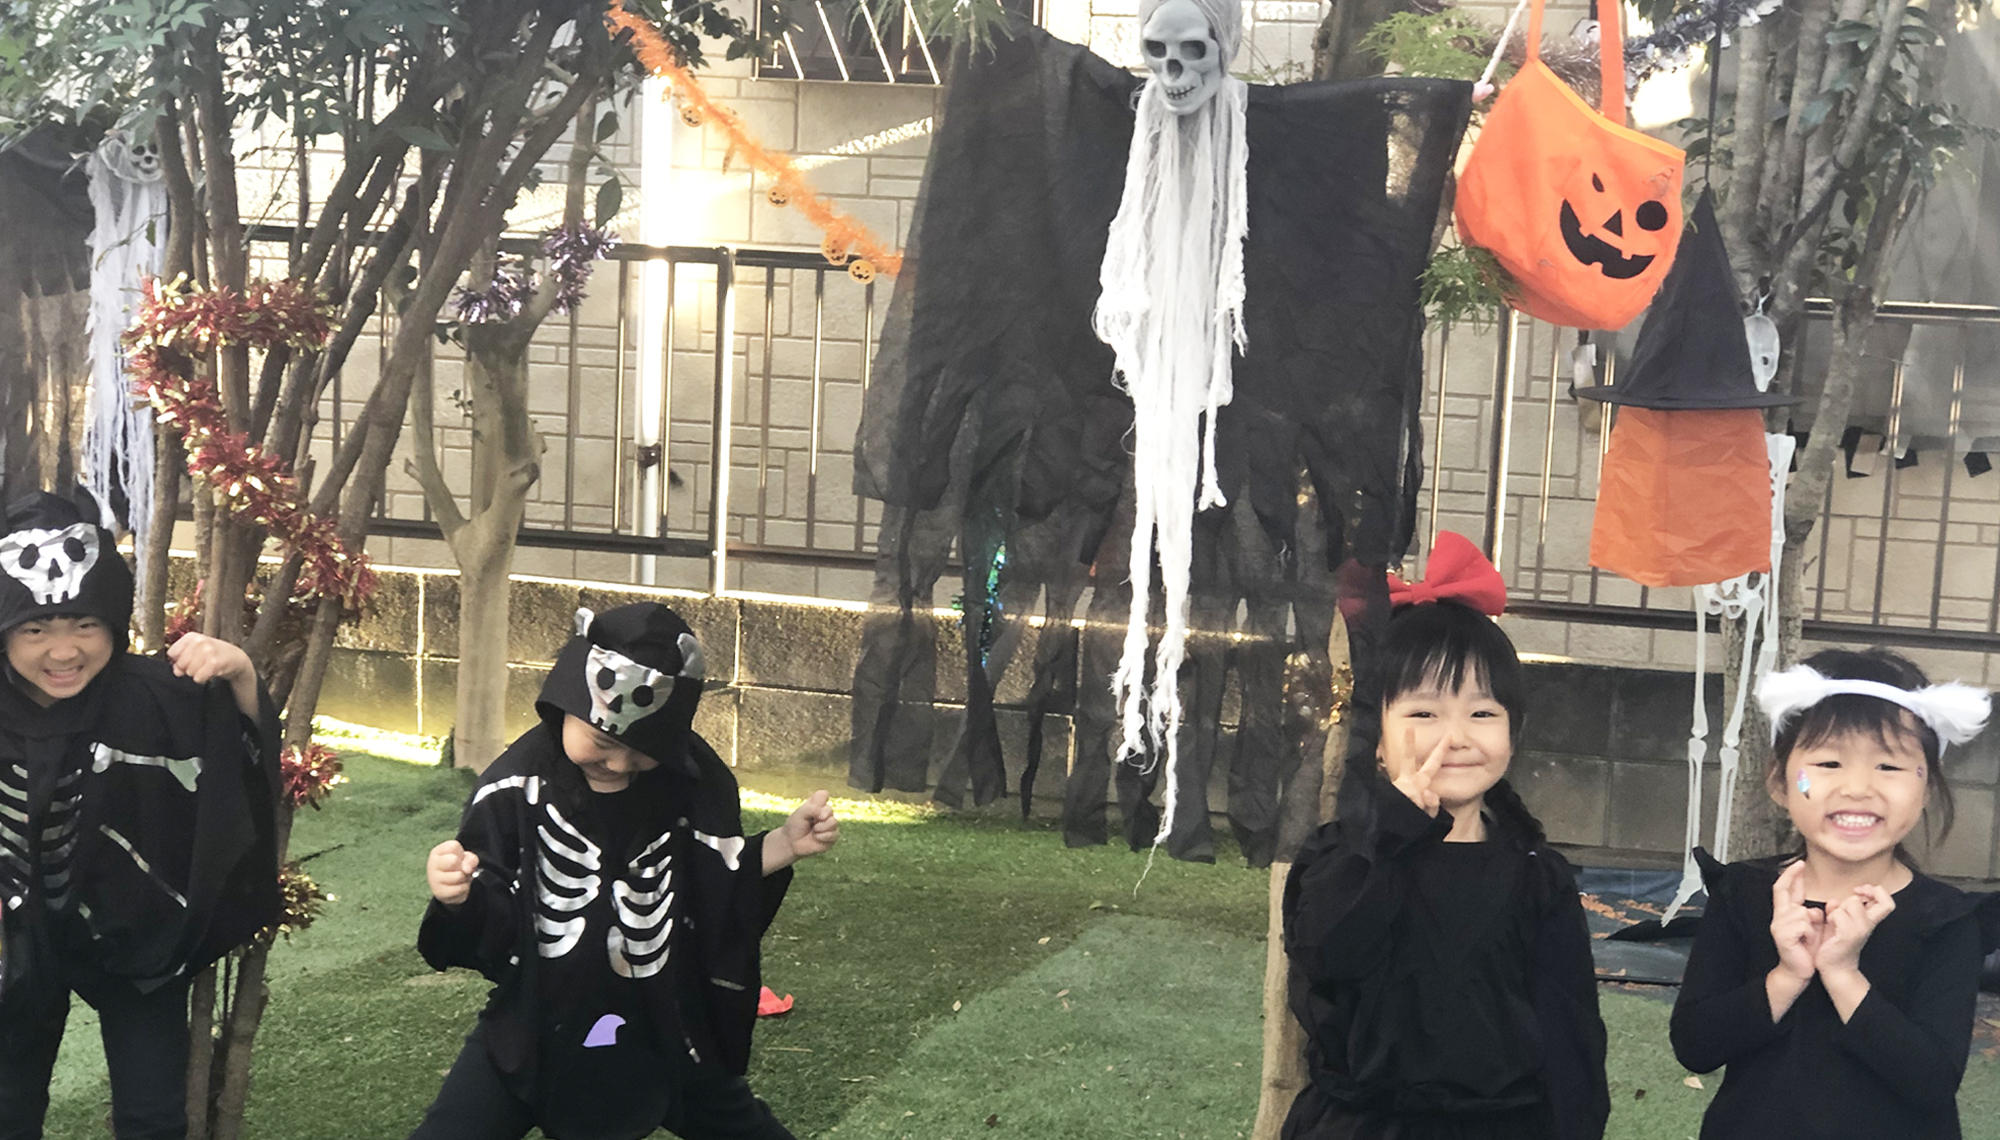 Children in costume on Halloween